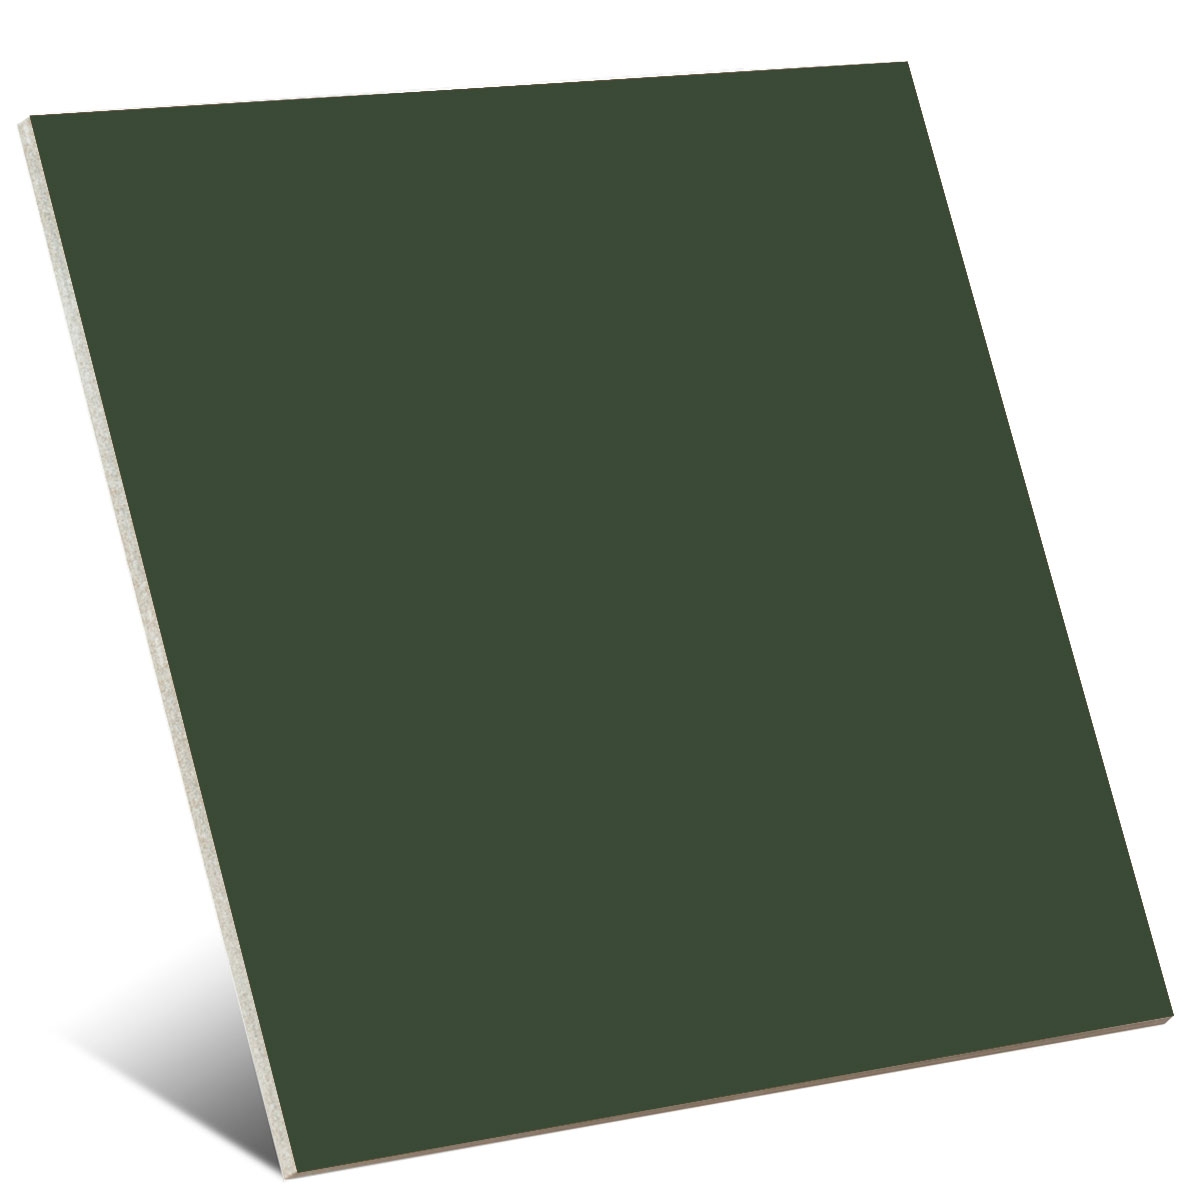 Element Verde 25x25 (1 m2)